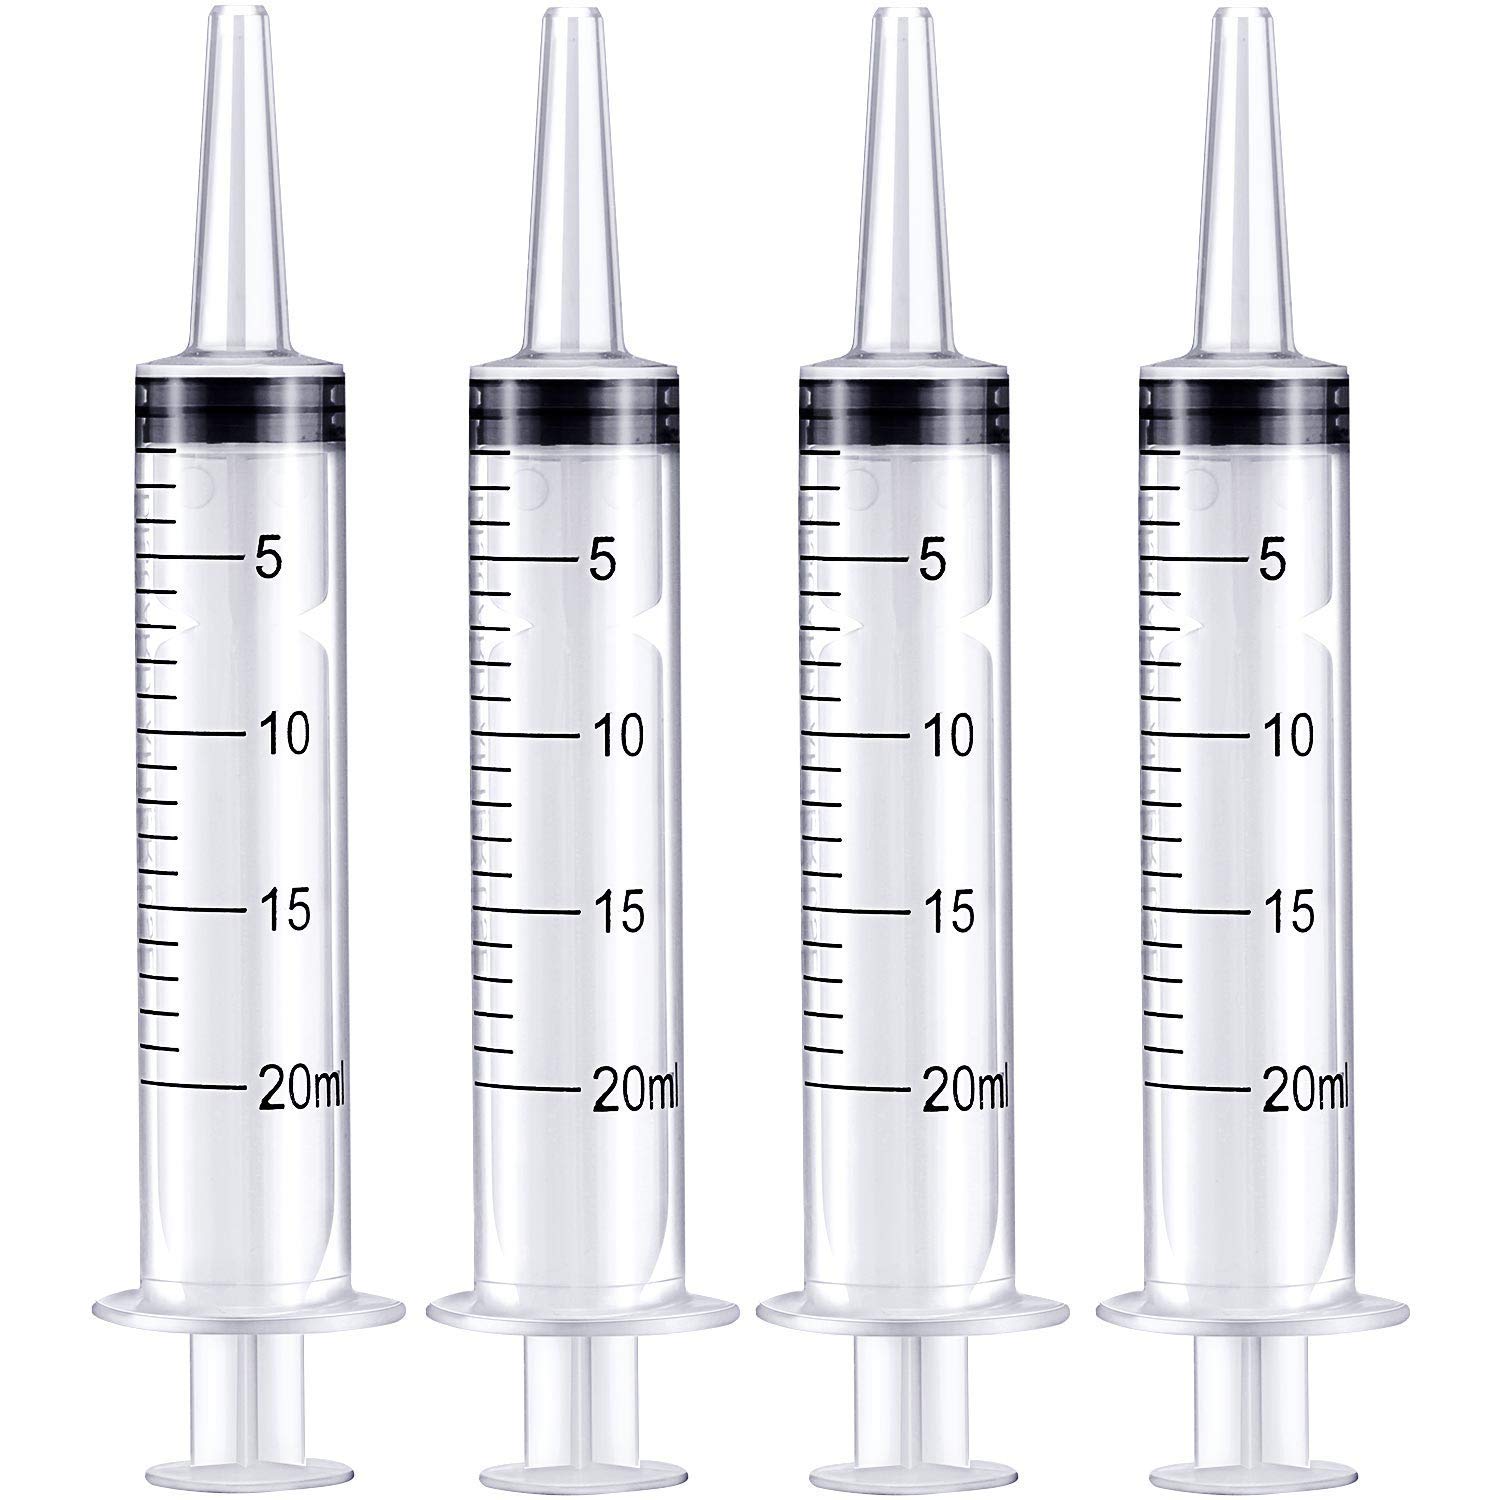 Measuring Syringe - Accessories